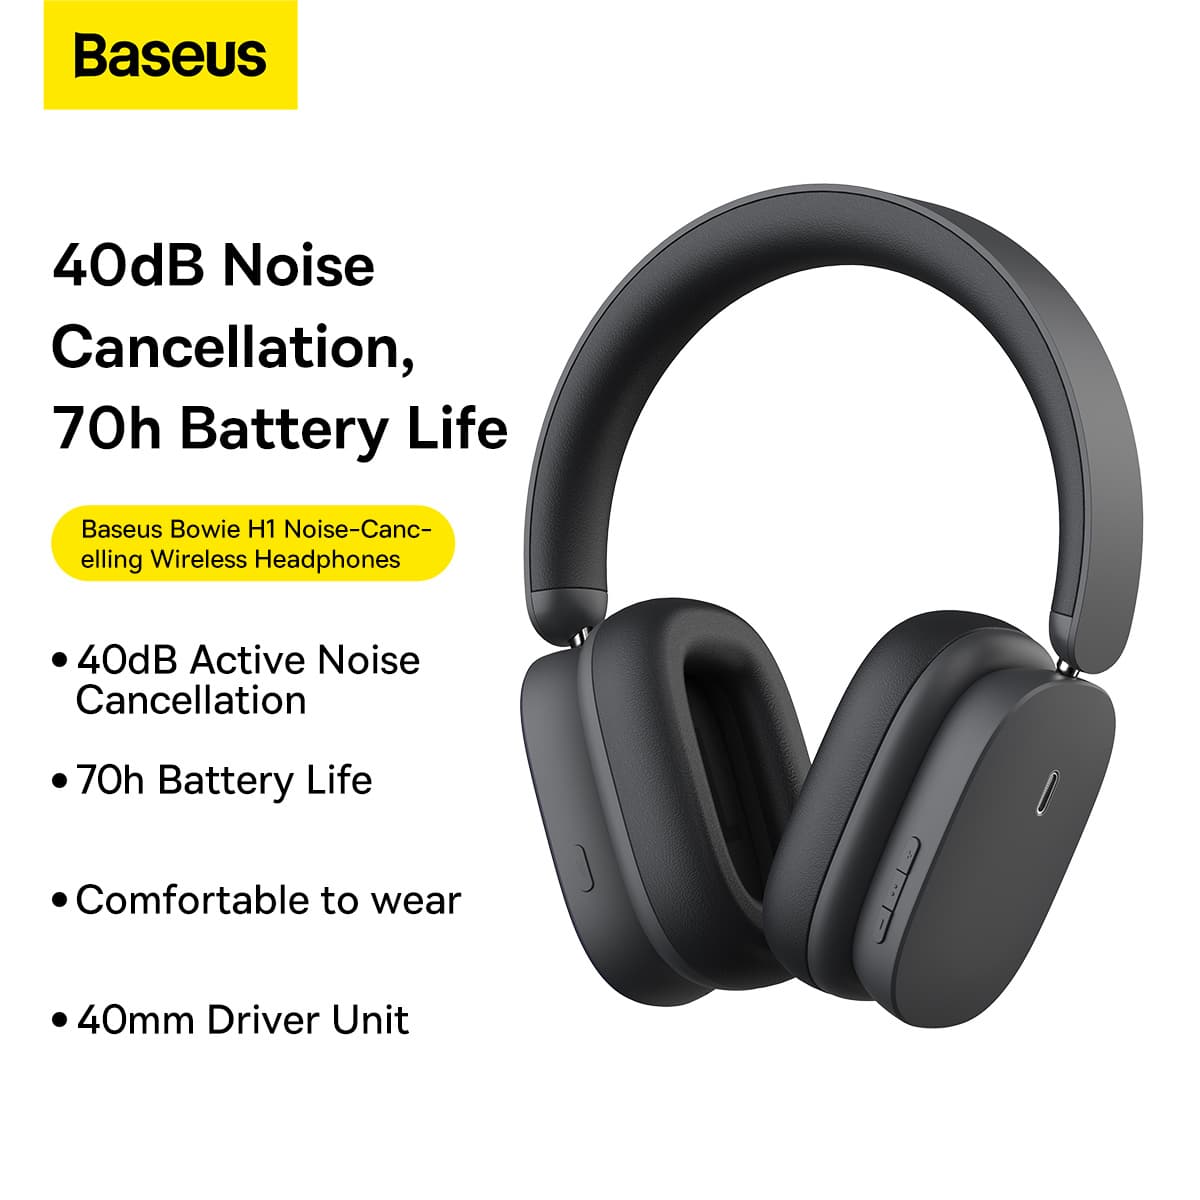 Baseus H1 Bowie Noise Cancelling Wireless Headphone 5 1